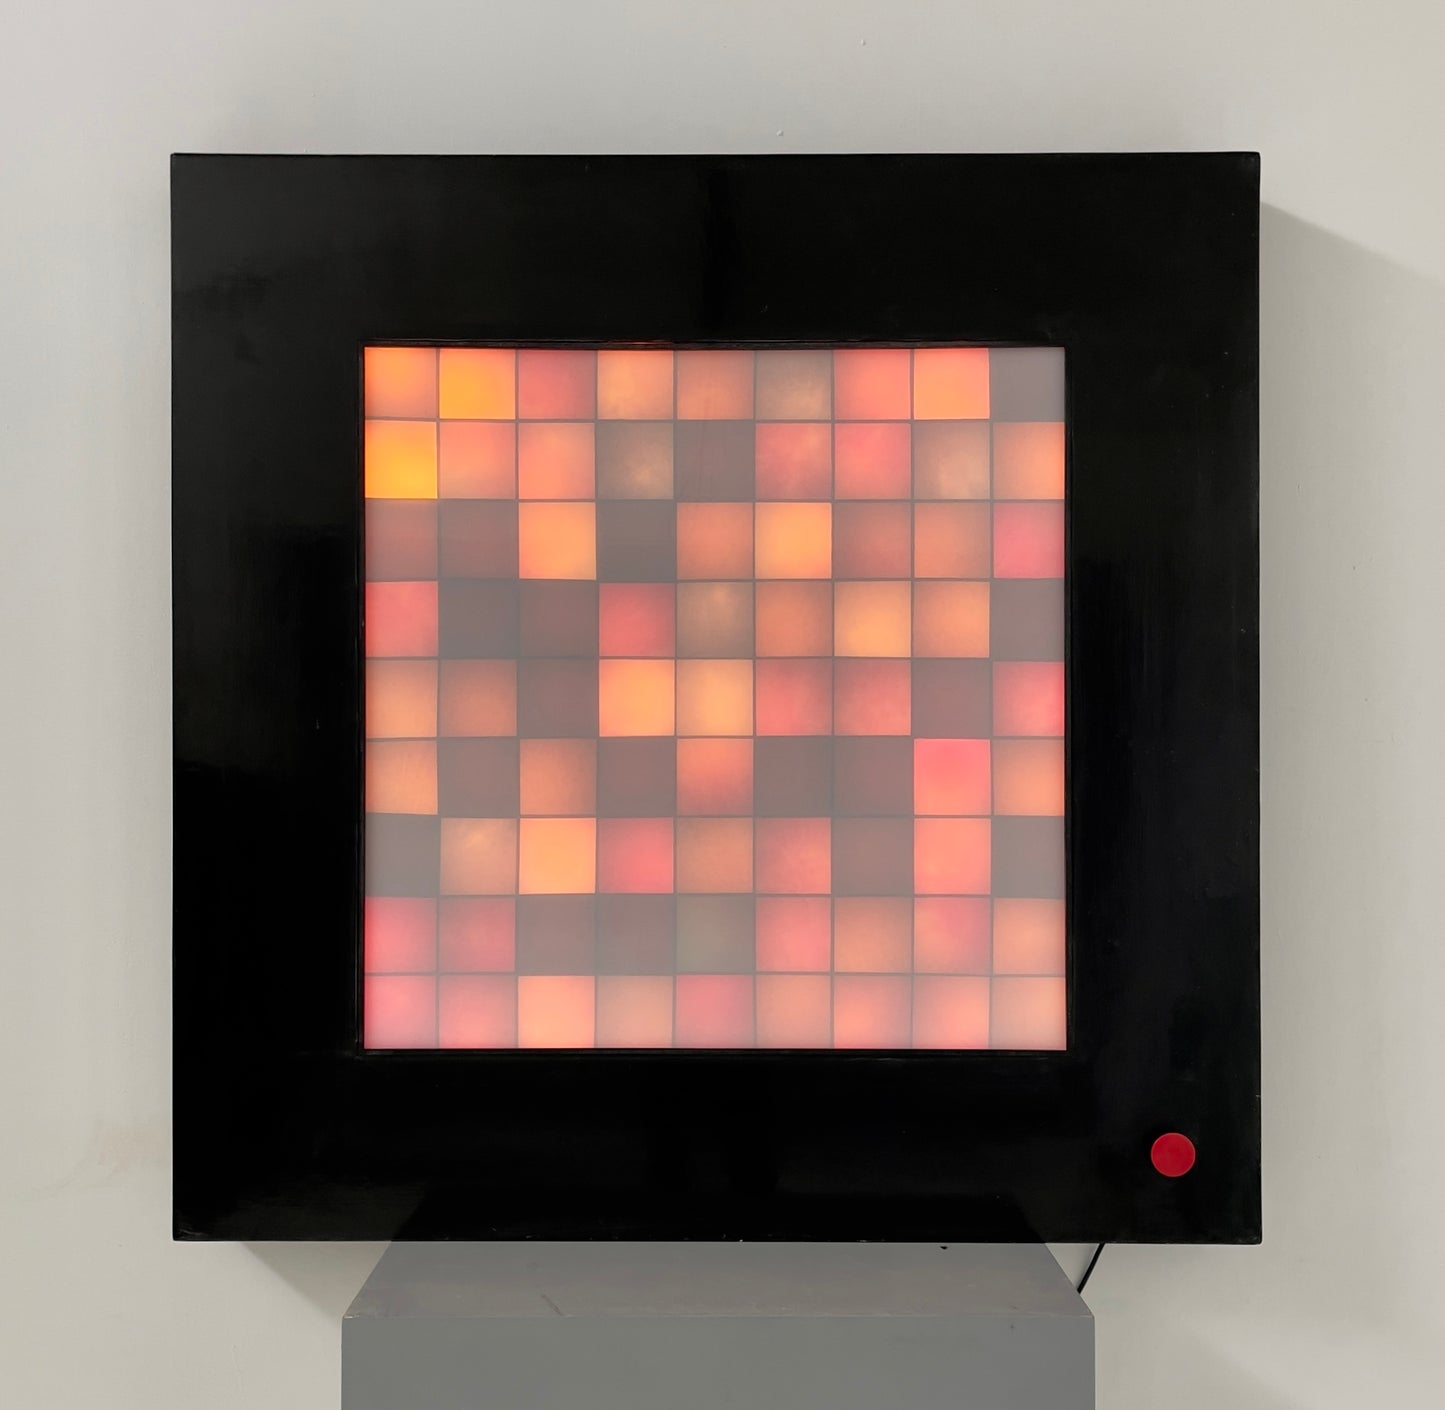 Kinetic light panel by Gaetano Pesce, 1963